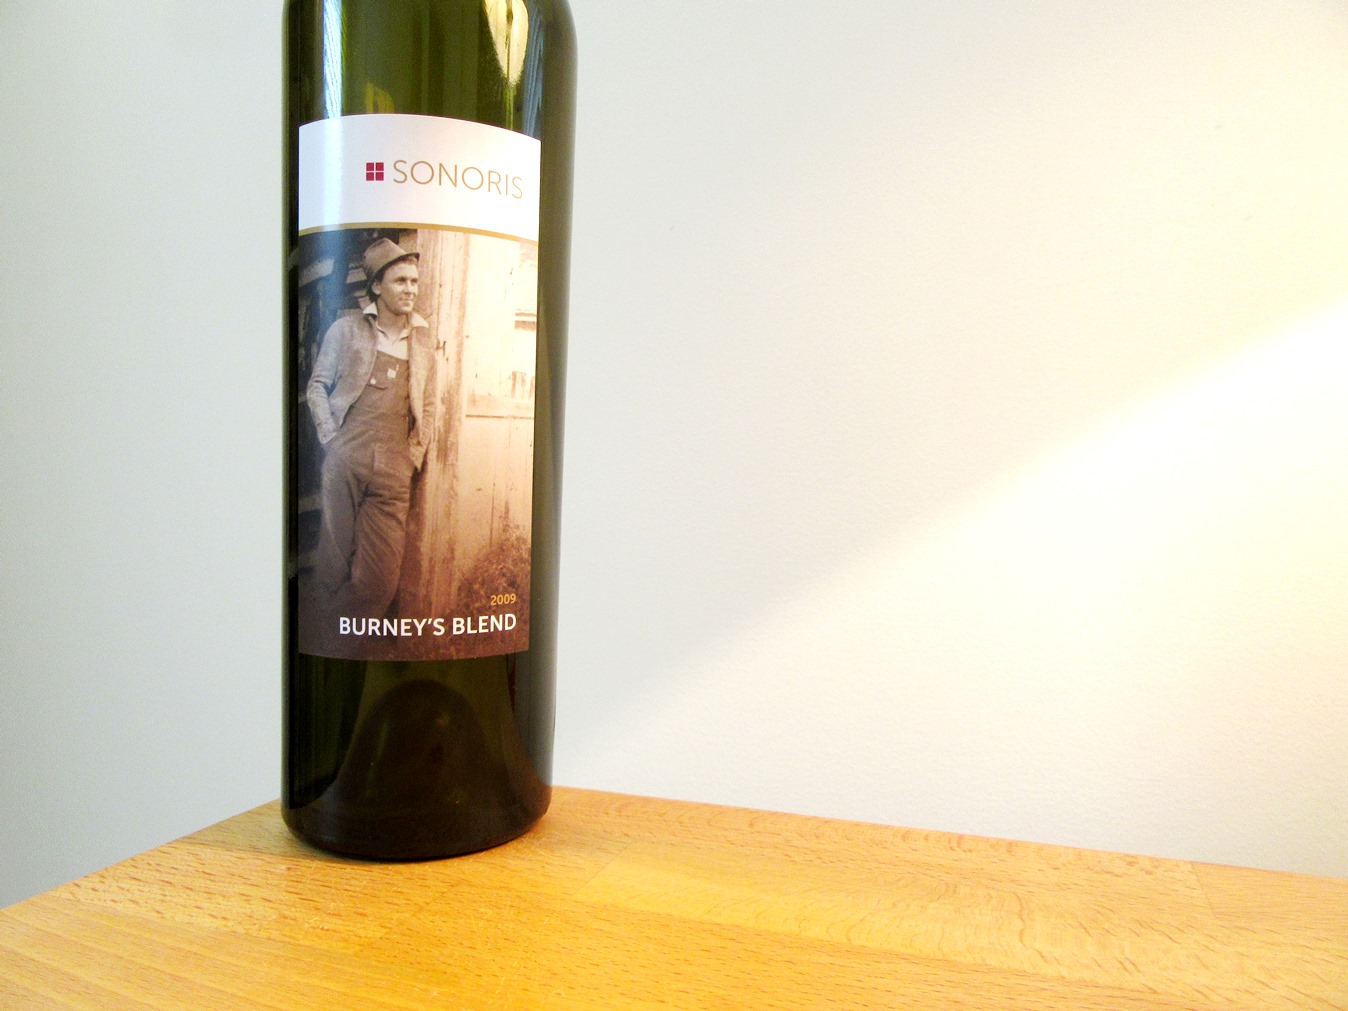 Sonoris, Burney’s Blend 2009, Columbia Valley, Washington, Wine Casual